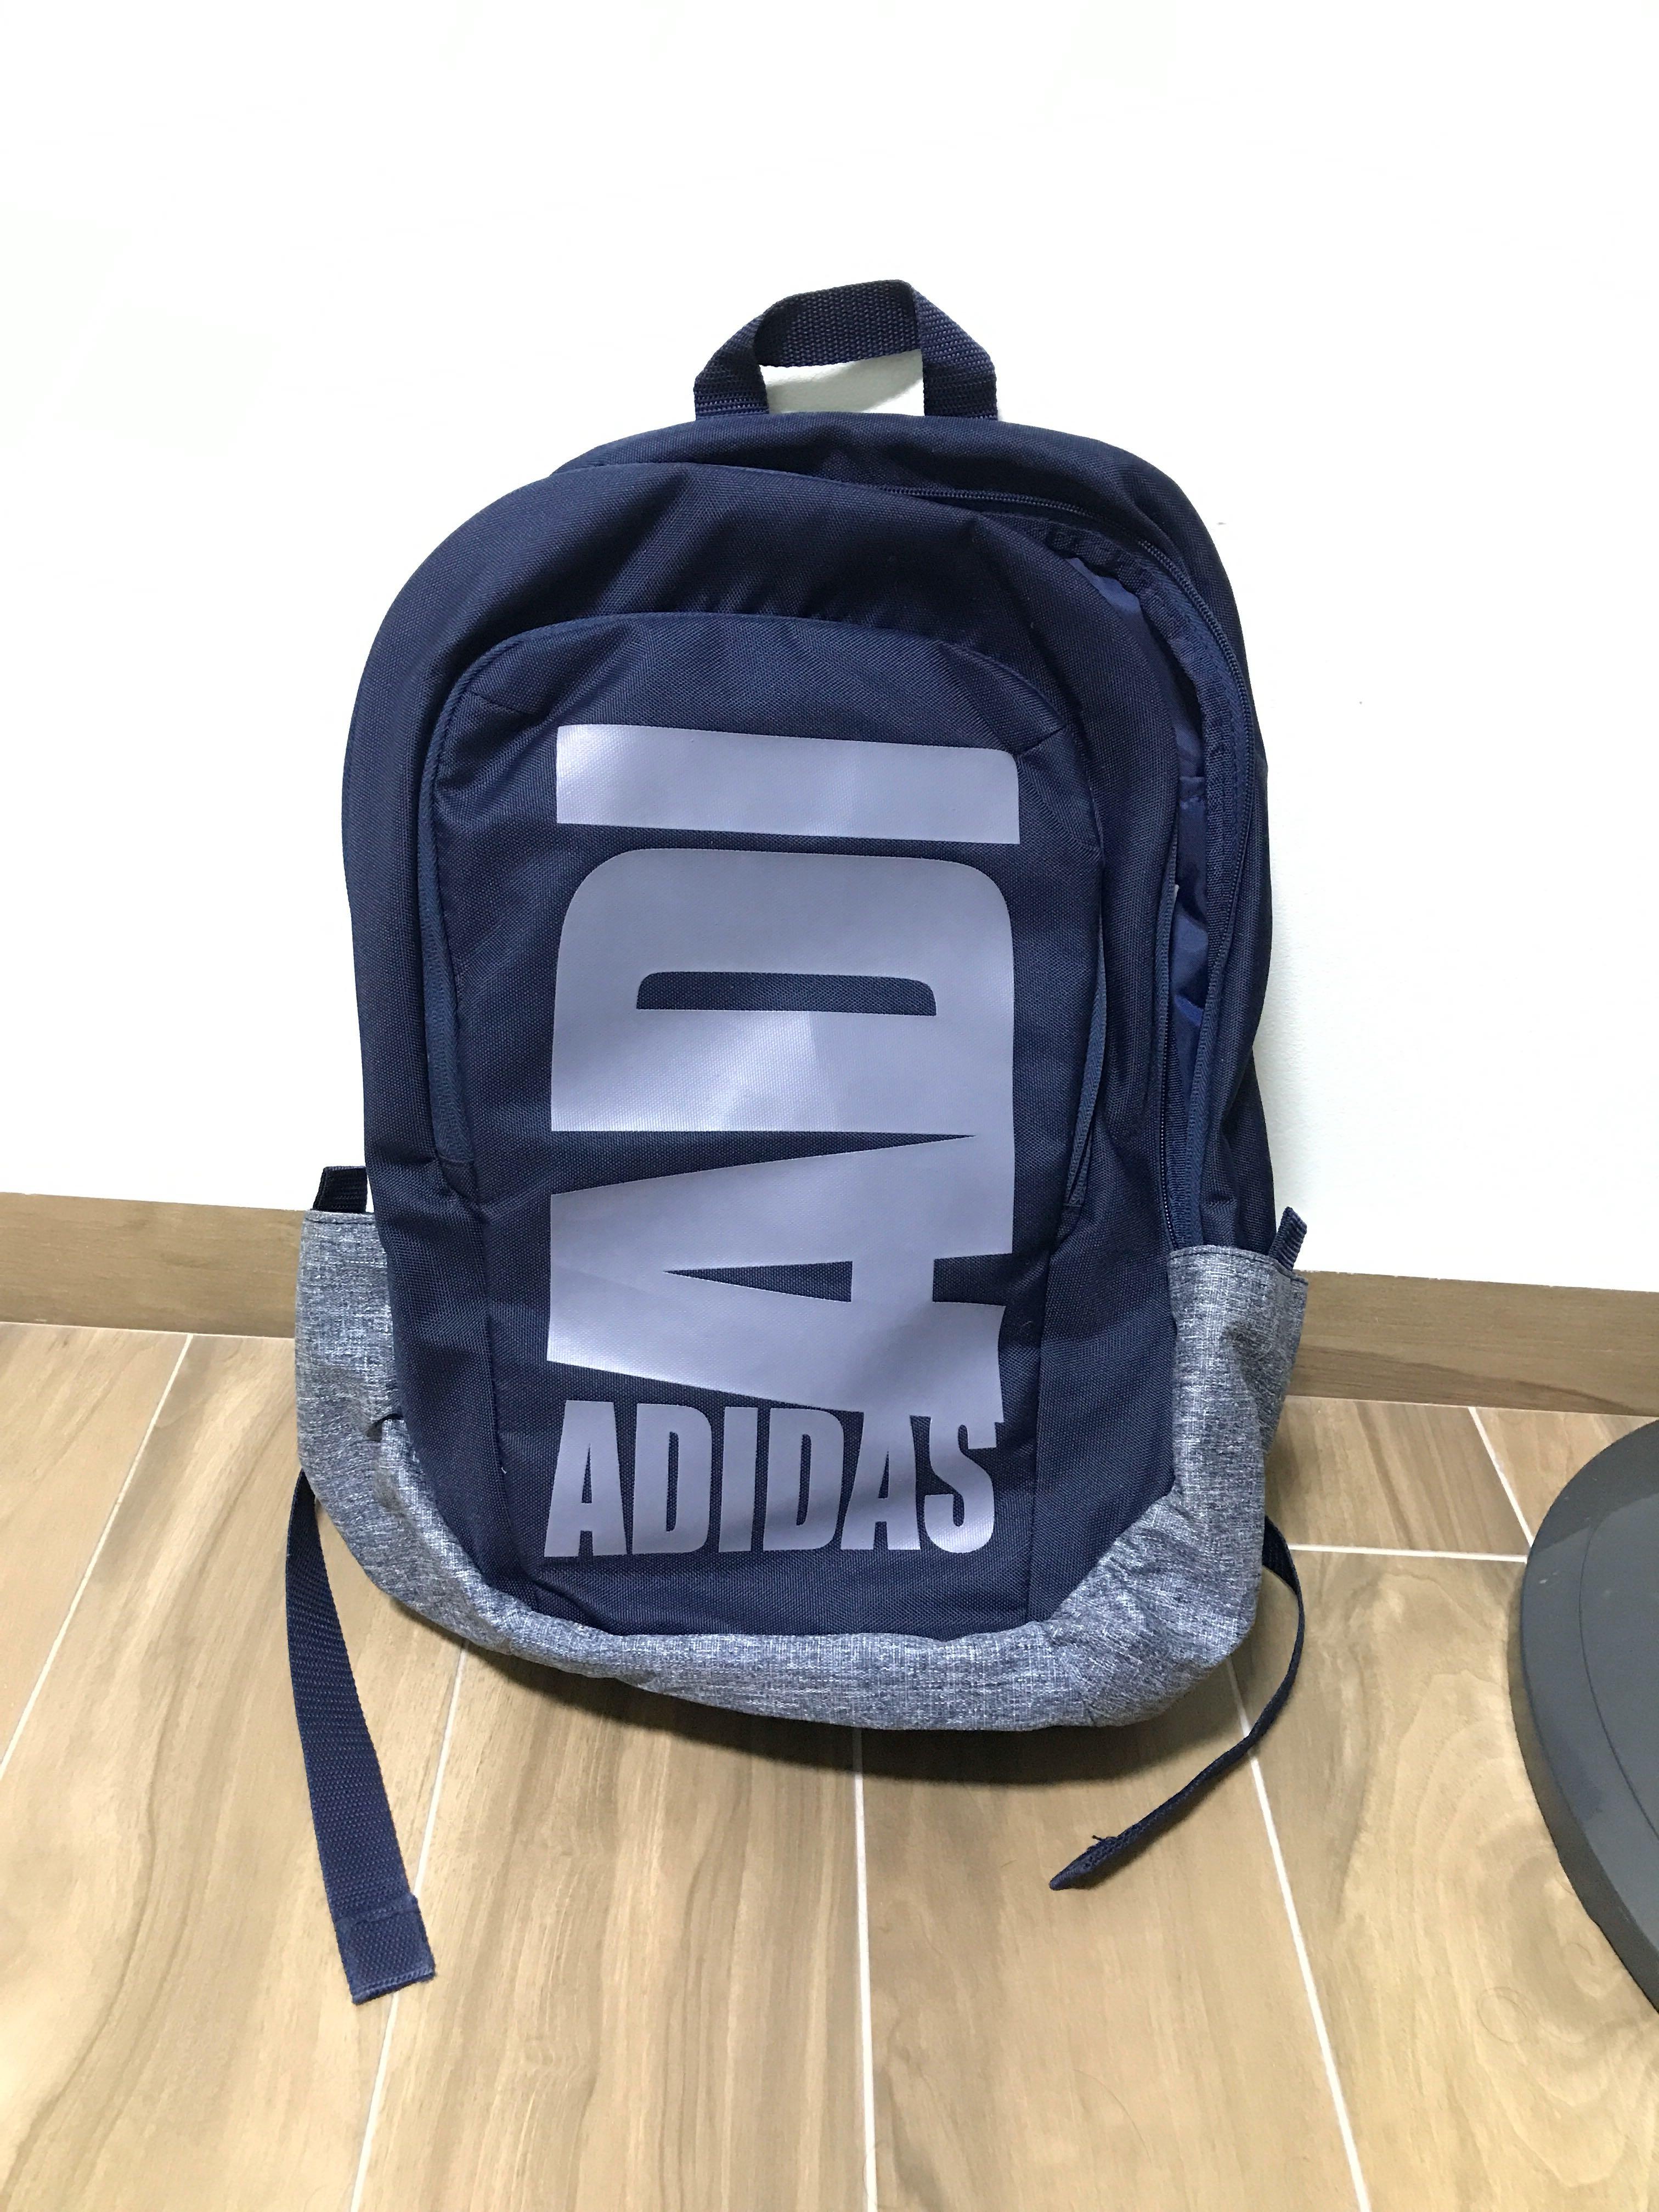 Adidas NEO Backpack, Men's Fashion 